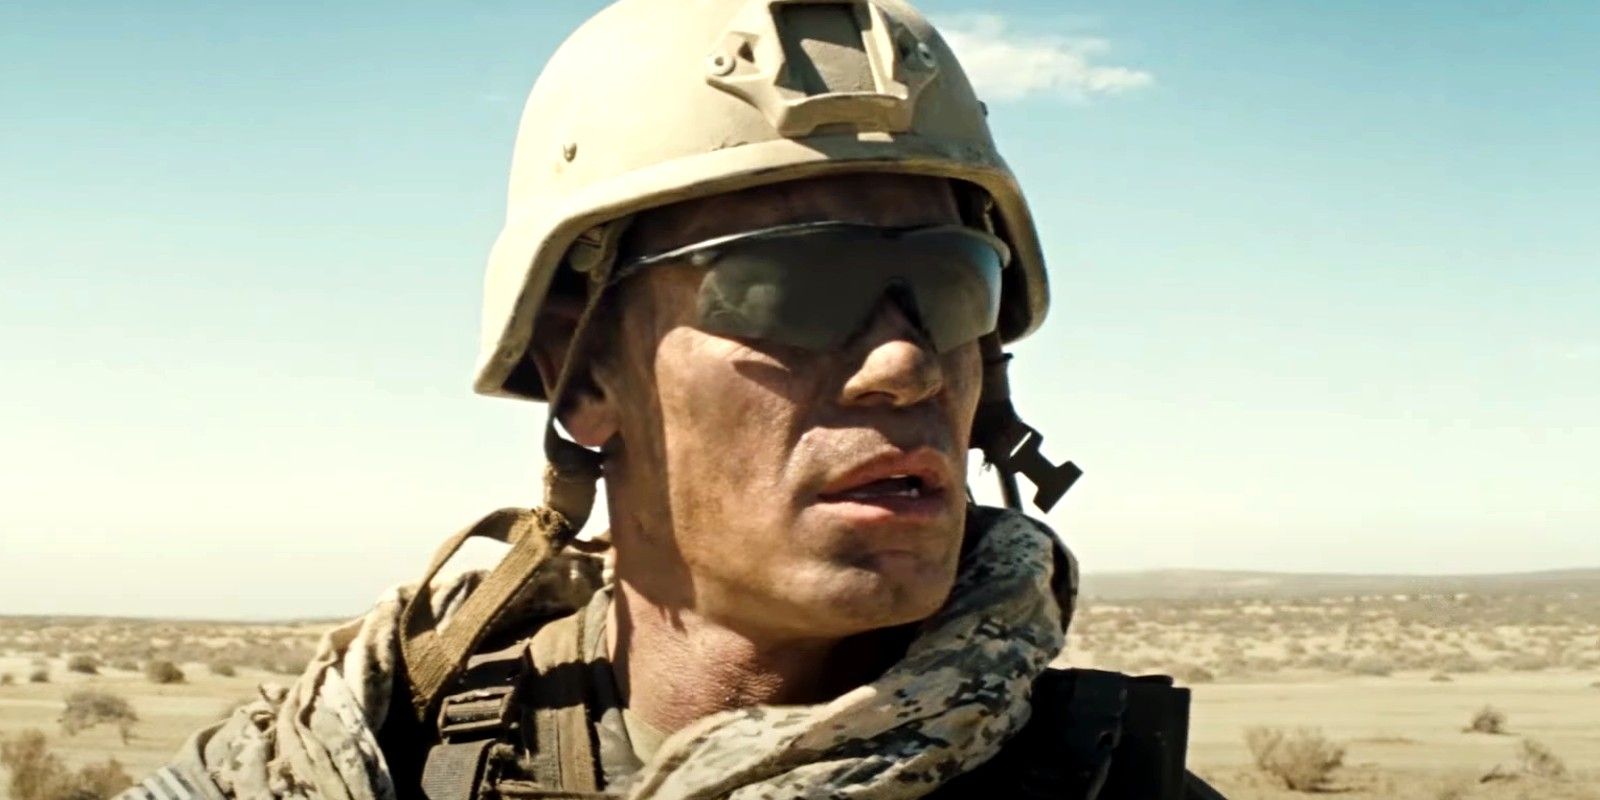 John Cena as Shane Matthews observing the desert in The Wall